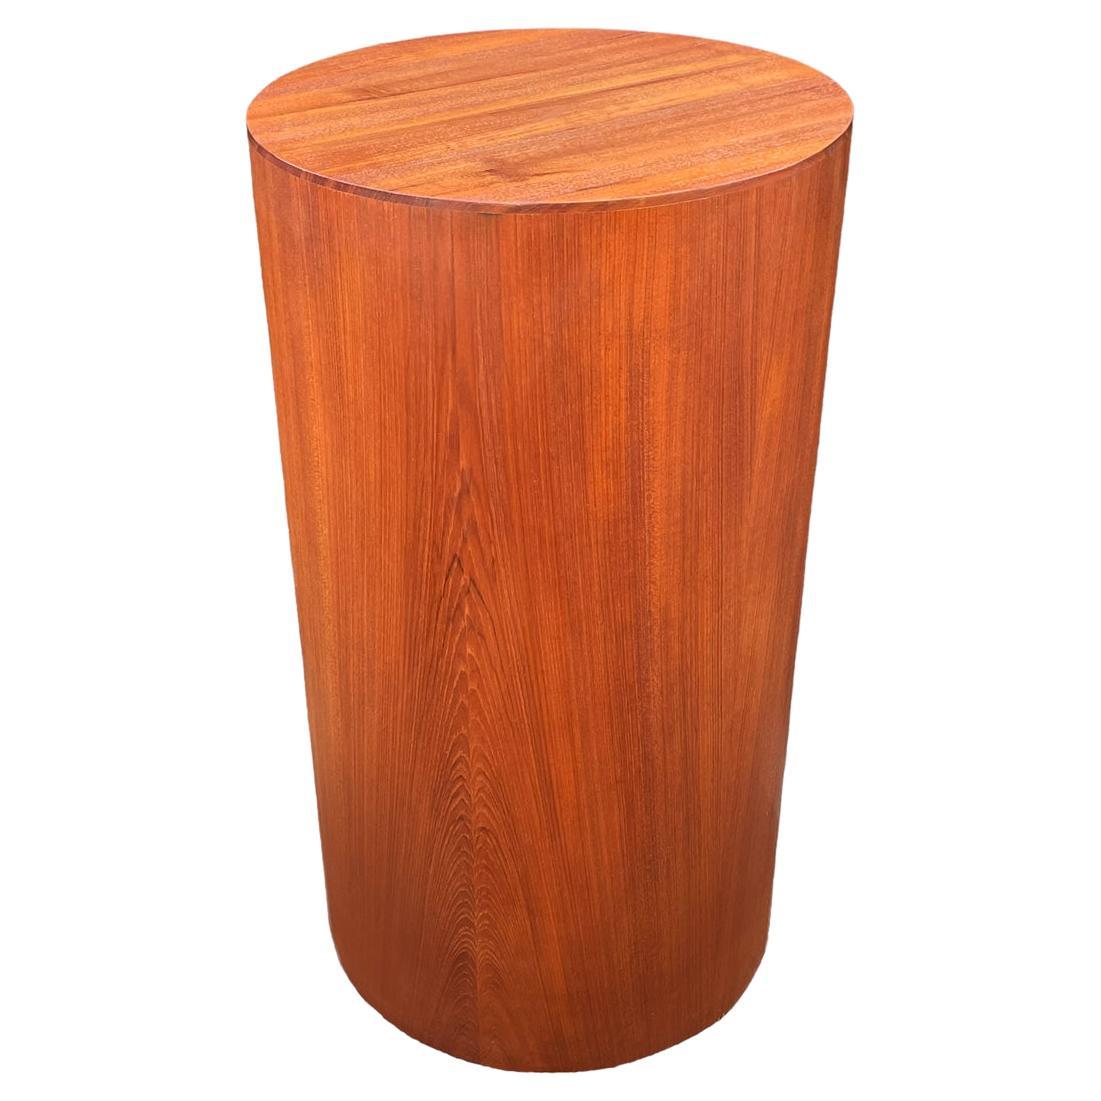 Tall Mid Century Danish Modern Round Circular Teak Drum Table / Display Pedestal For Sale